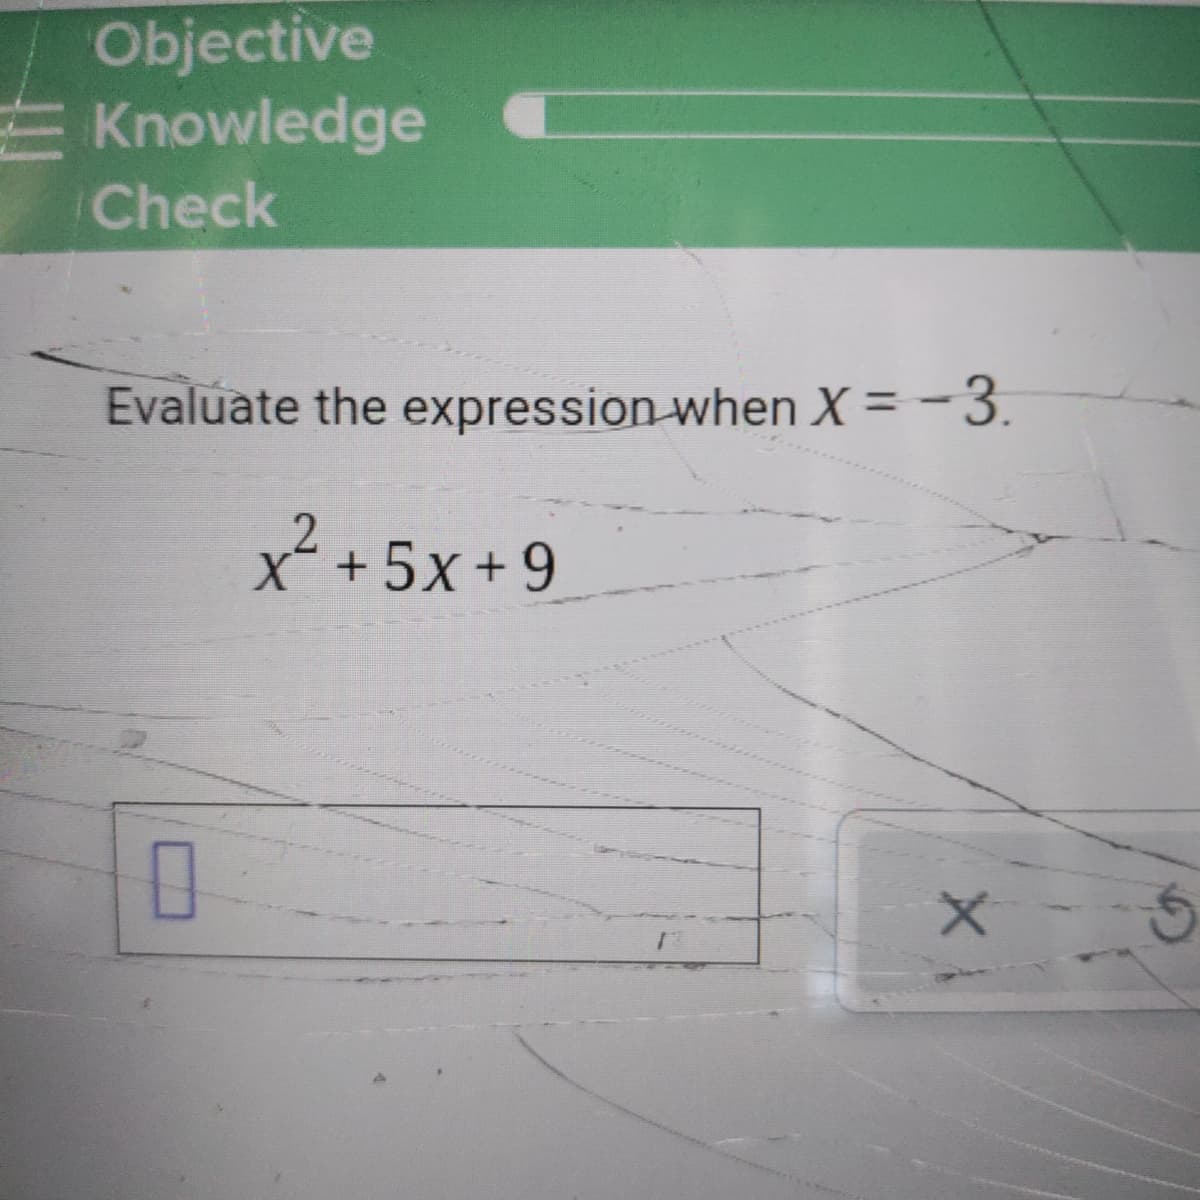 Objective
E Knowledge
Check
Evaluate the expression when X = -3.
2.
X+5x+9
